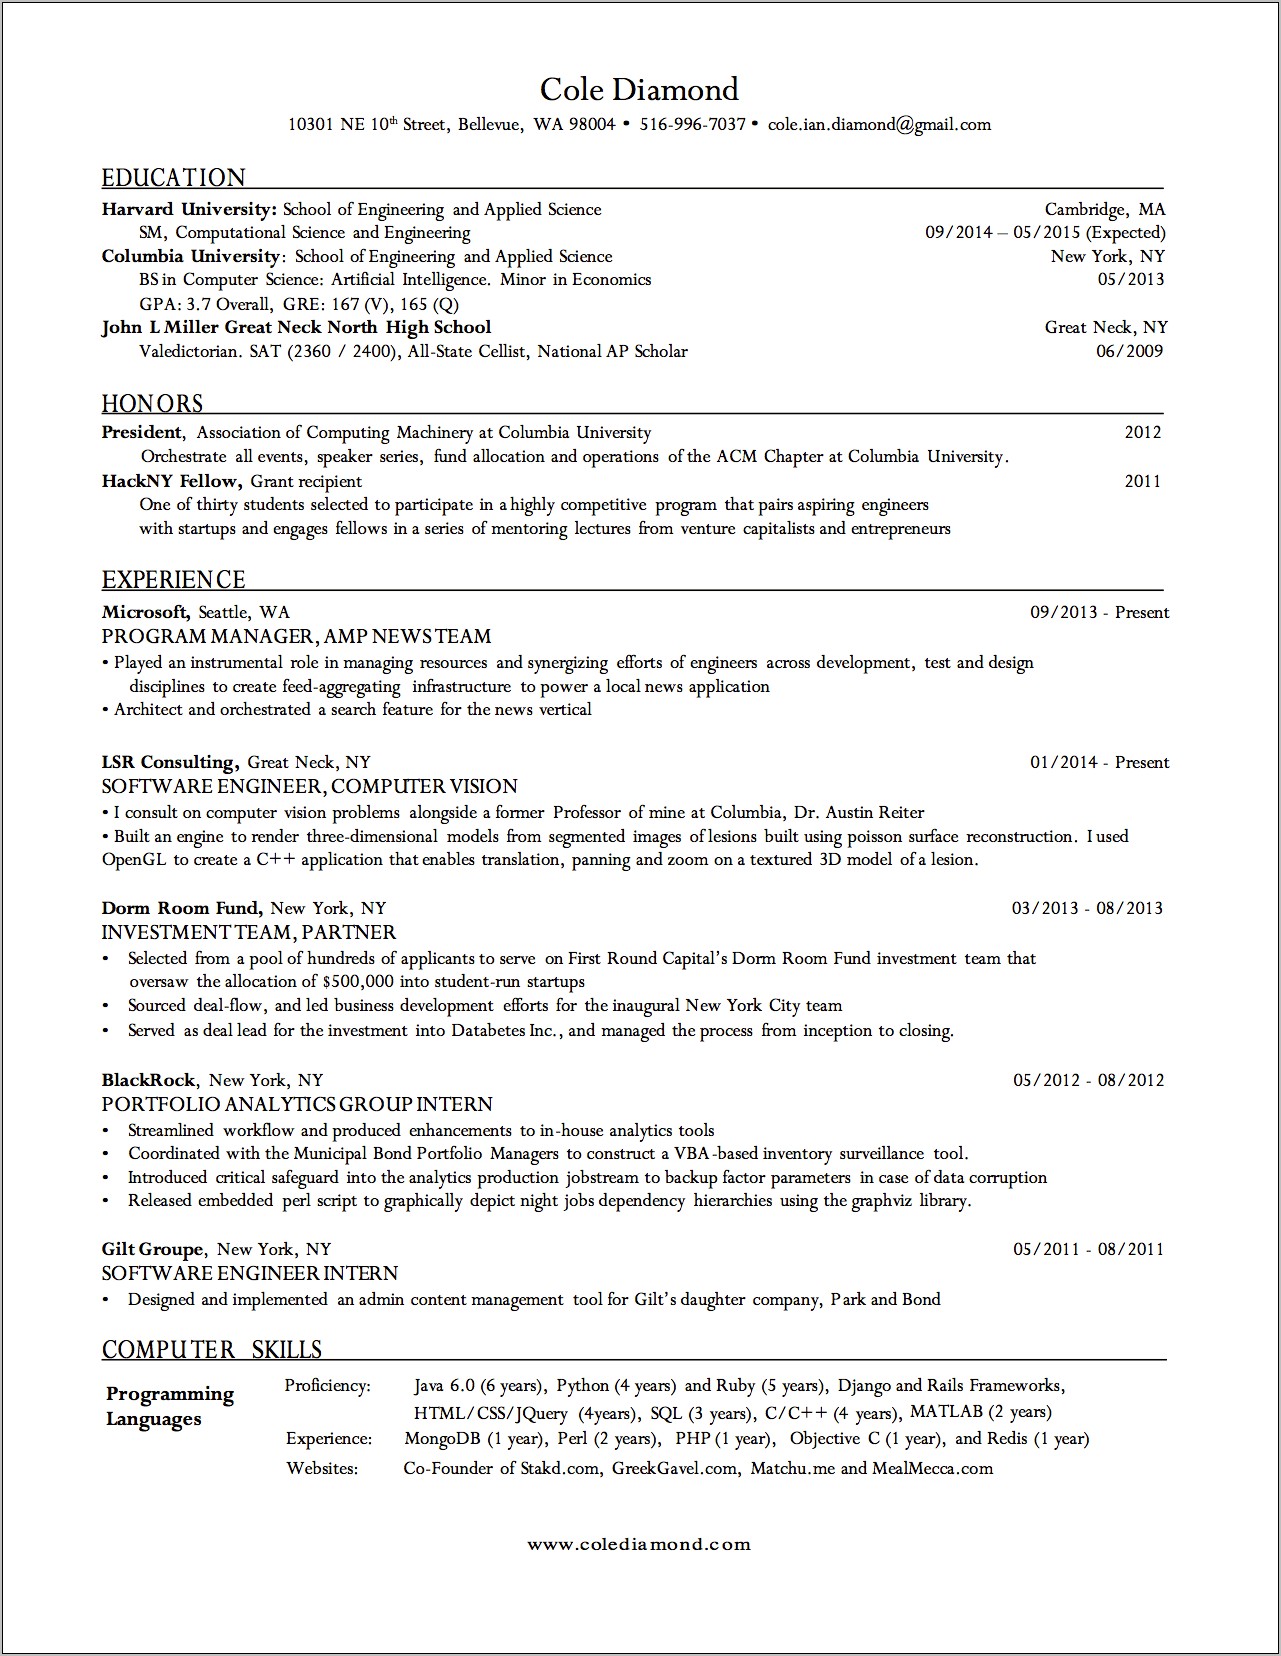 Best Resume According To Harvard